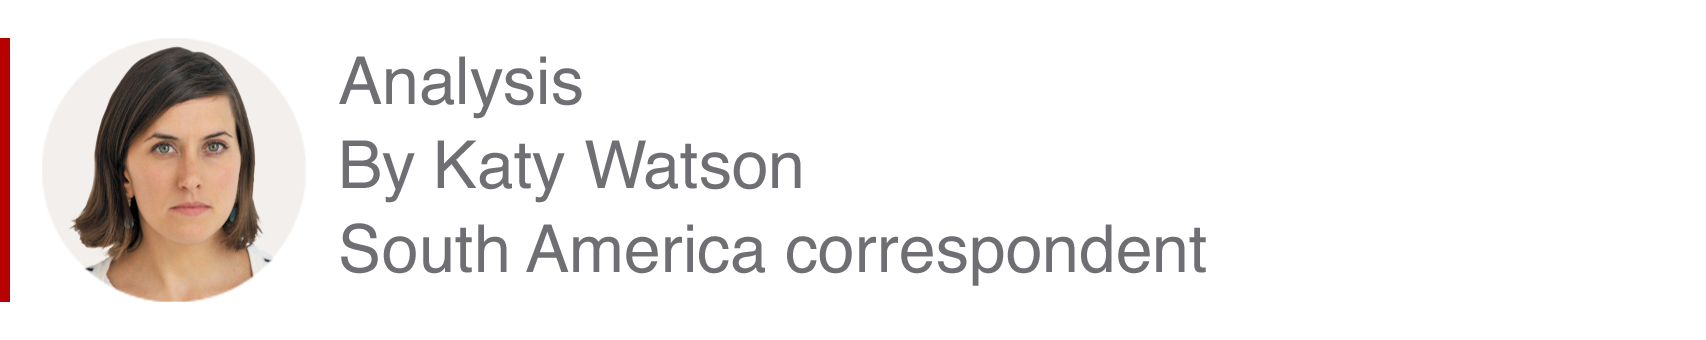 Analysis box by Katy Watson, South America correspondent